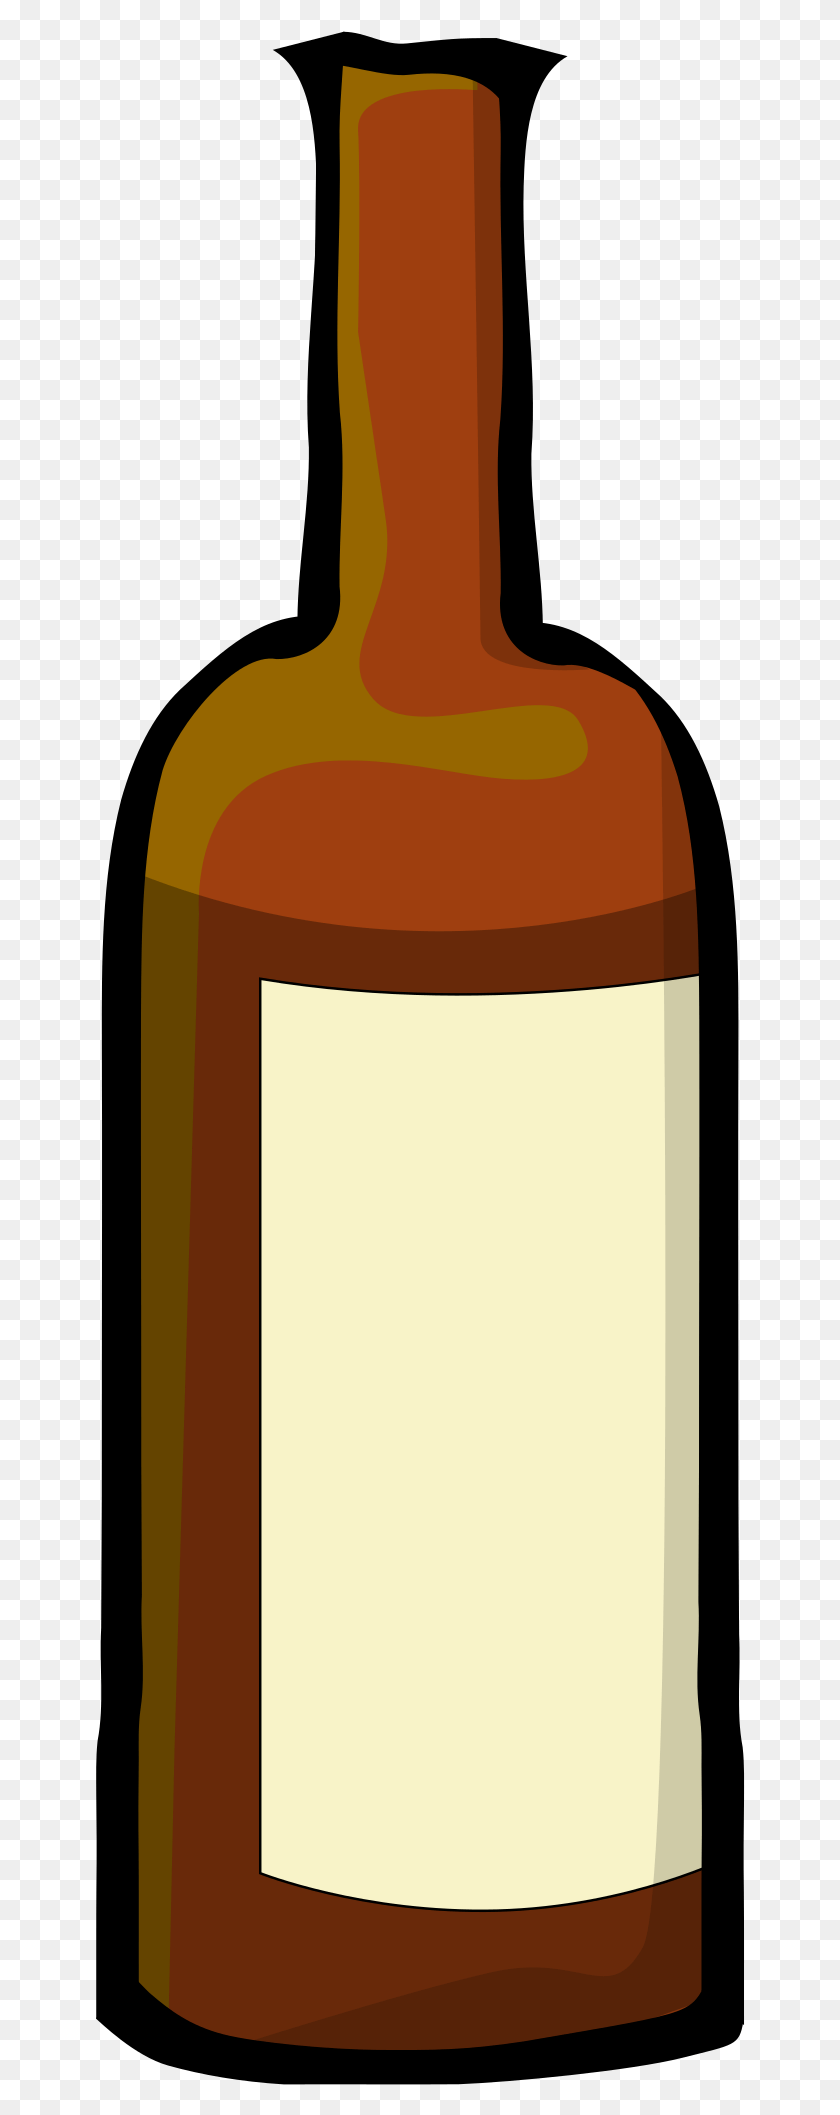 651x2055 Botella De Vino De Dibujos Animados Bebida Botellas De Alcohol Botella De Vino Png, Etiqueta, Texto, Botella Hd Png